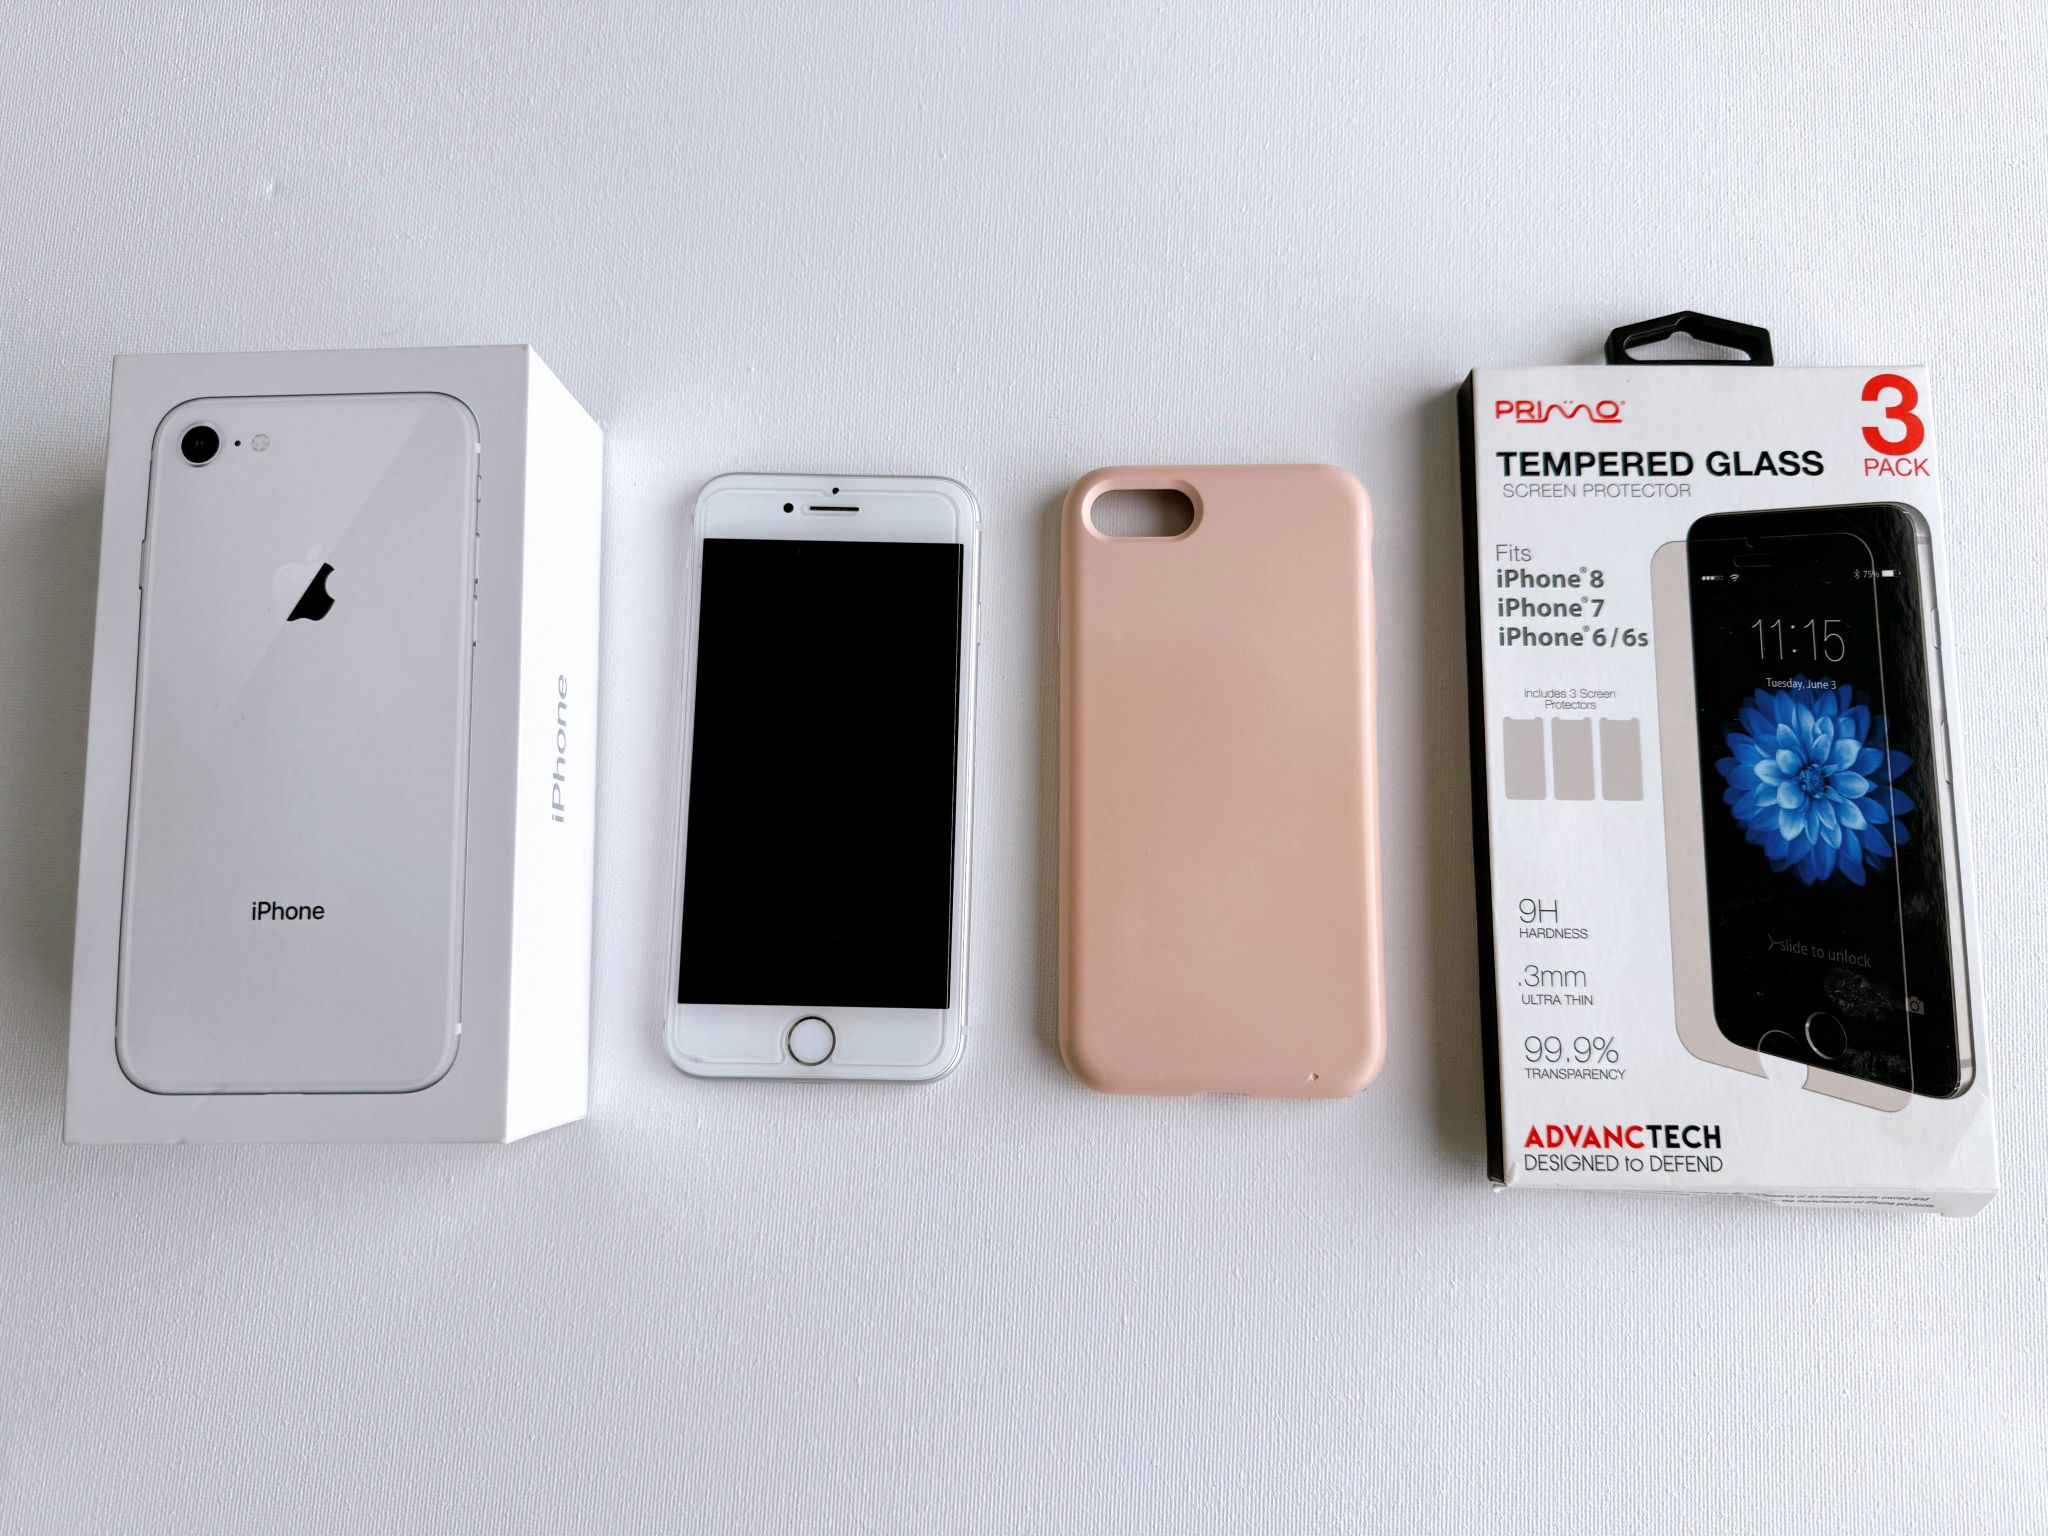 iPhone 8 -64GB, Box, Phone Case, Screen Protector 